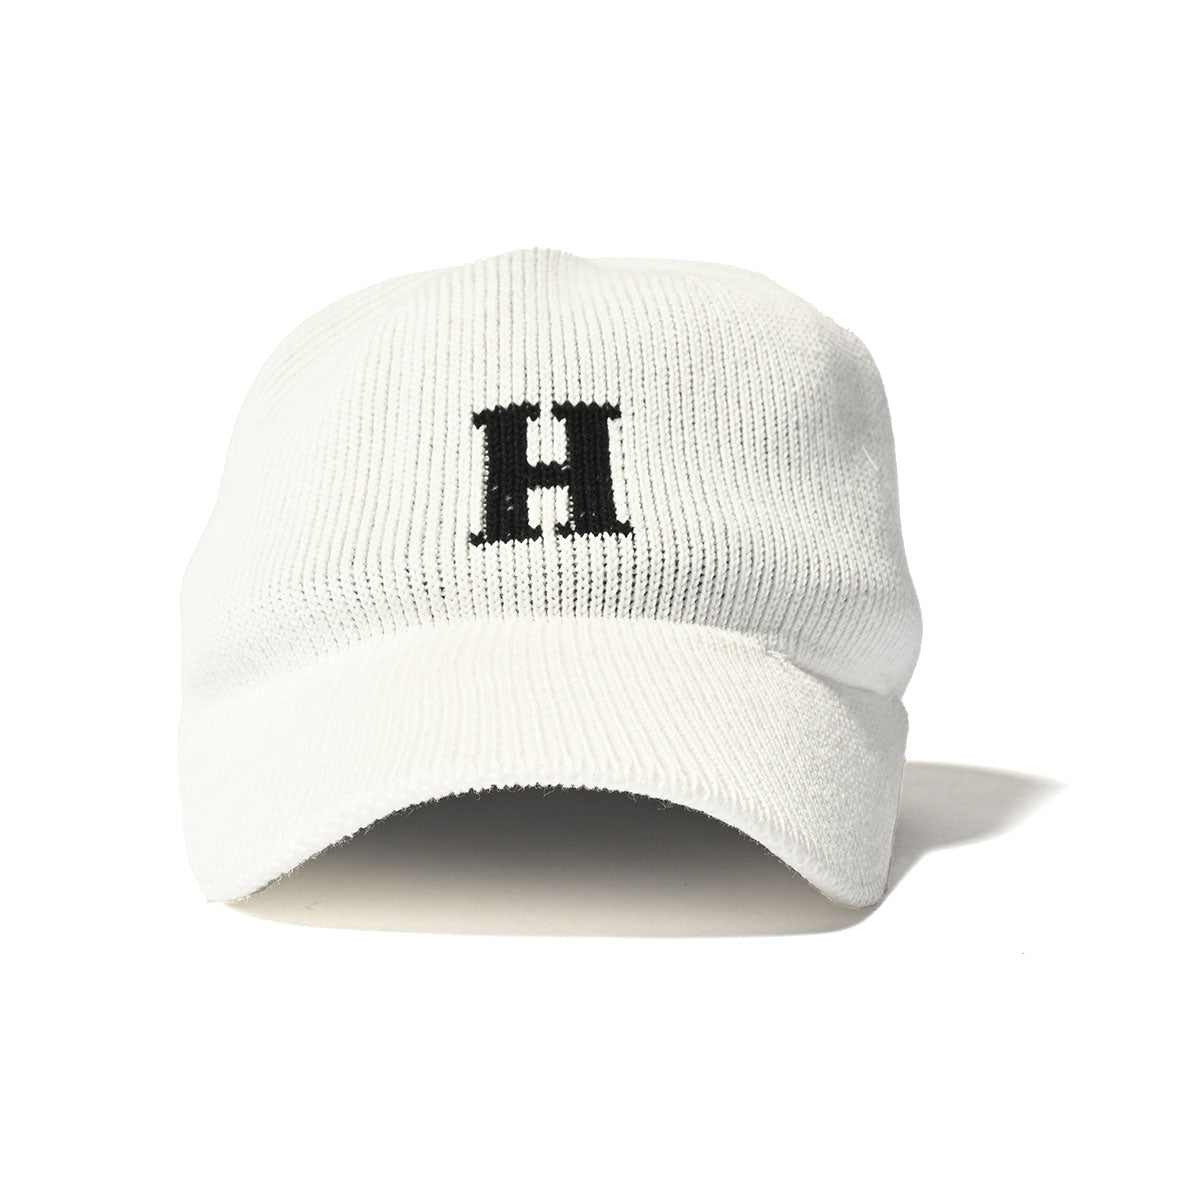 HOMEGAME - H LOGO COTTON KNIT BASEBALL CAP WHITE【HG241414】